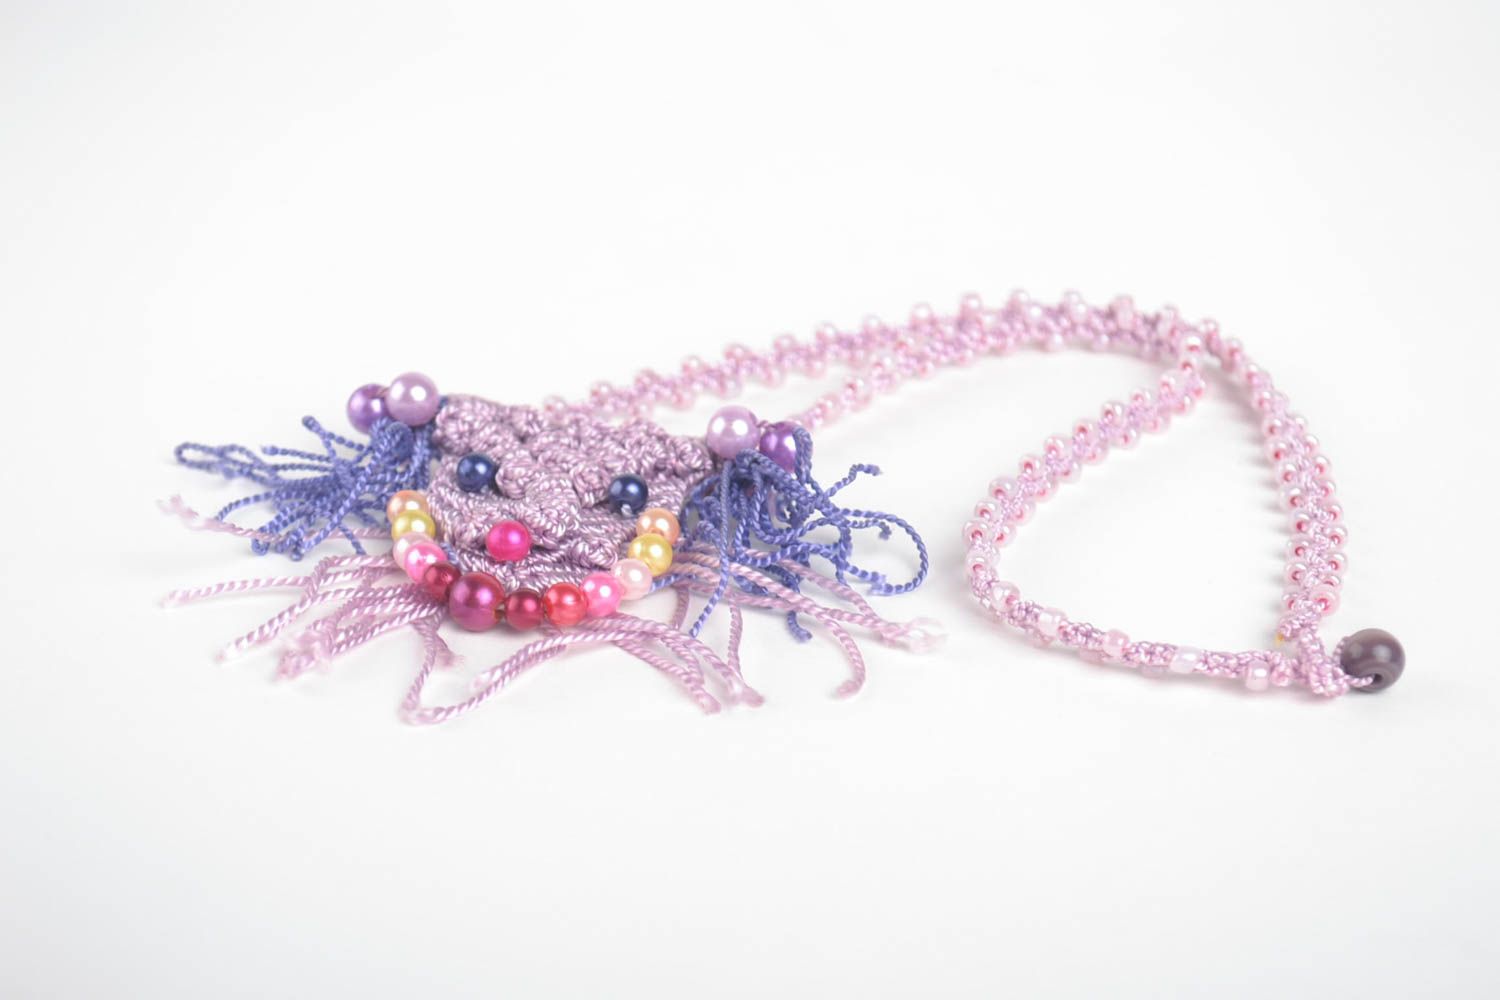 Handmade pendant designer pendant macrame pendant unusual jewelry gift ideas photo 4